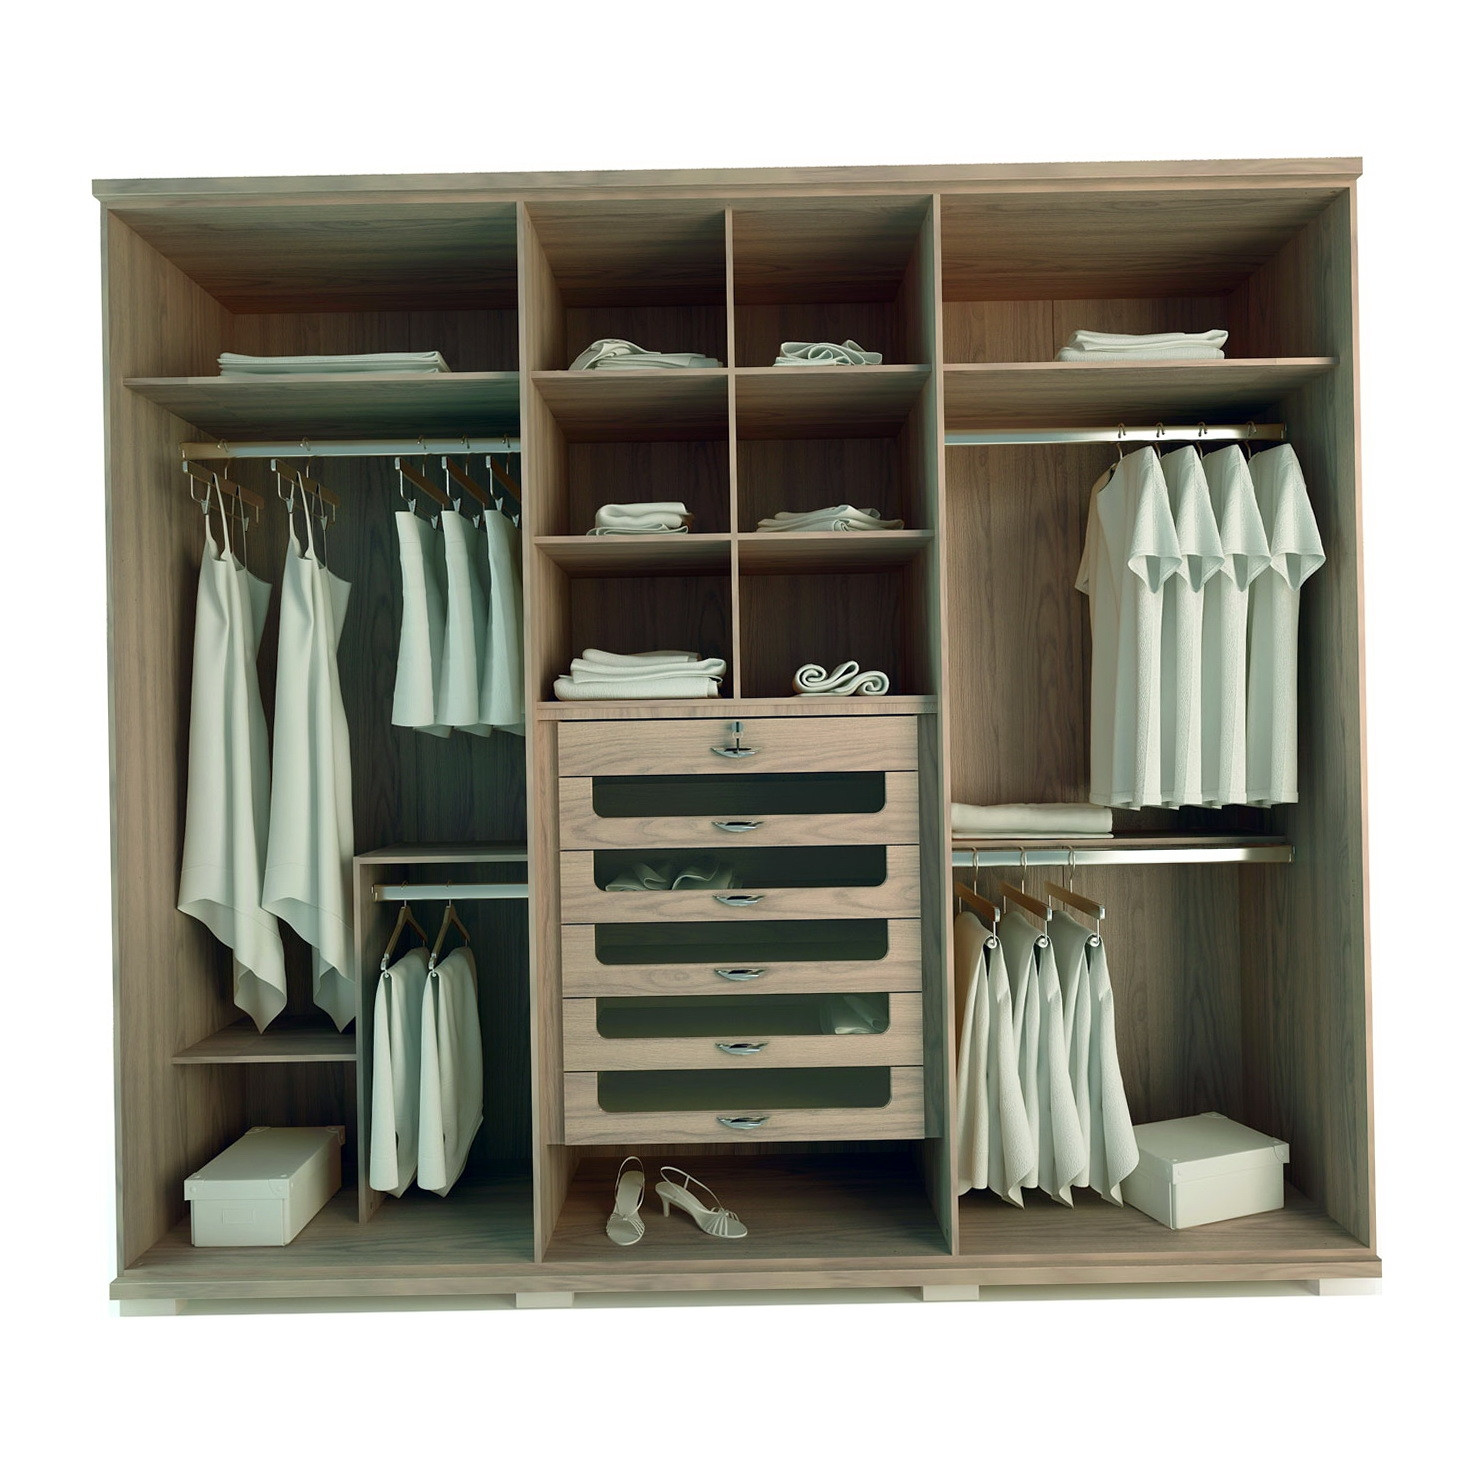 Best ideas about DIY Wardrobe Closet
. Save or Pin 20 Best Ideas of Stand Alone Wardrobe Closet Now.